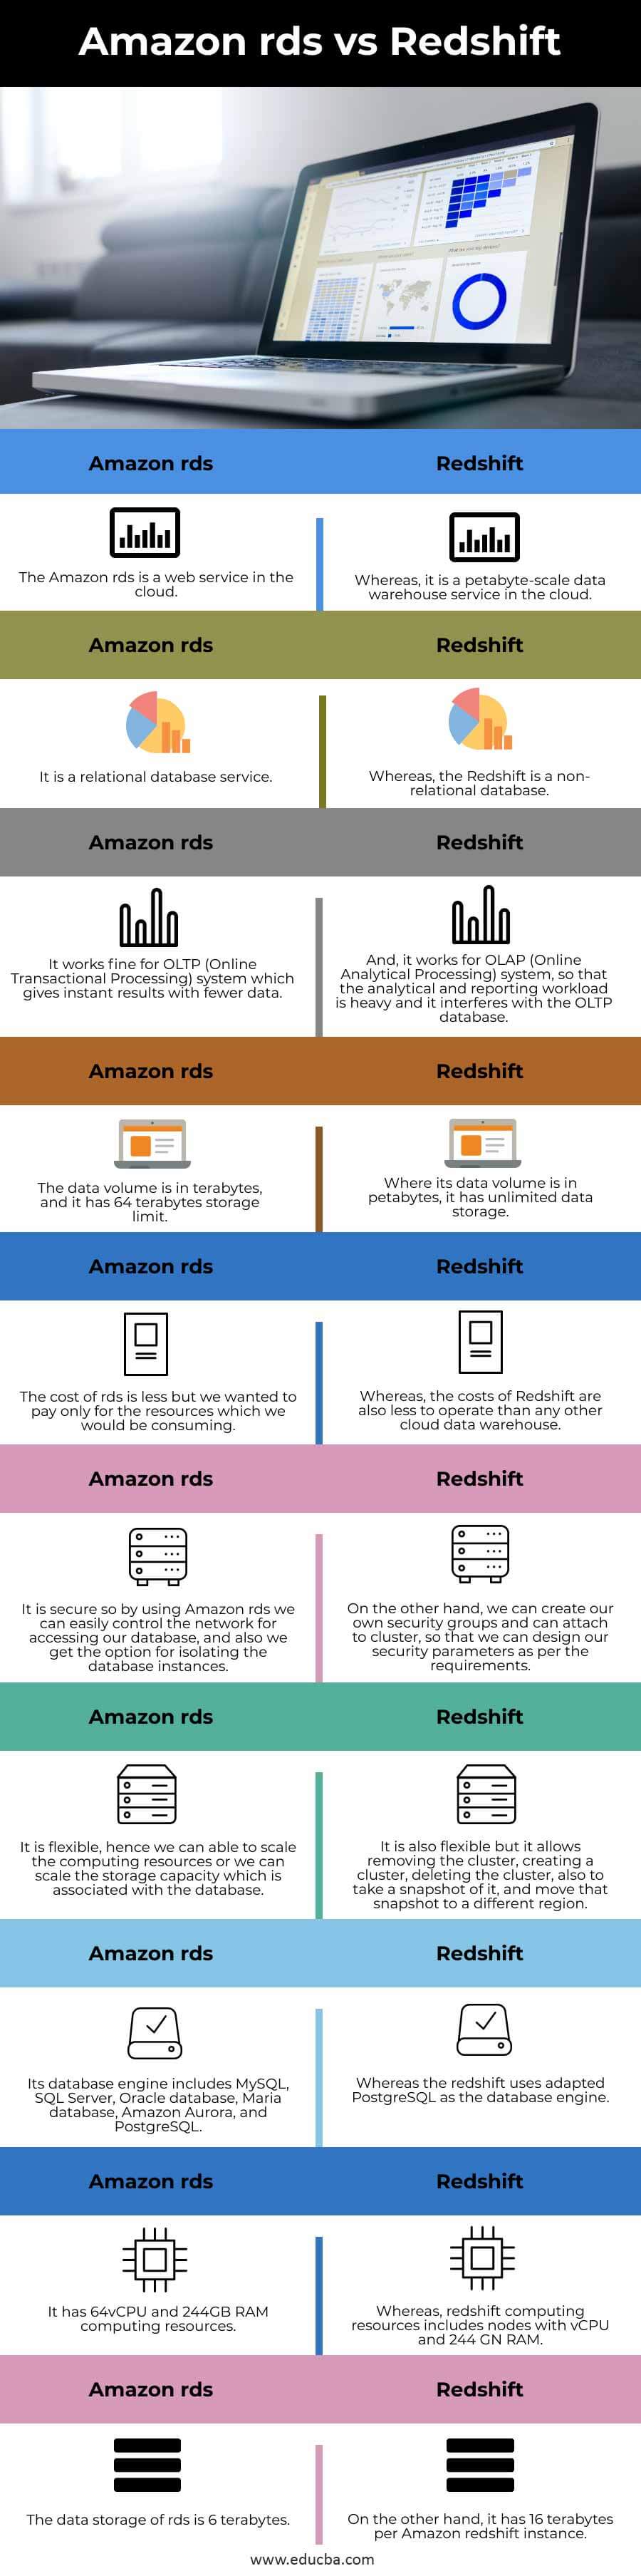 Amazon-rds-vs-Redshift-info